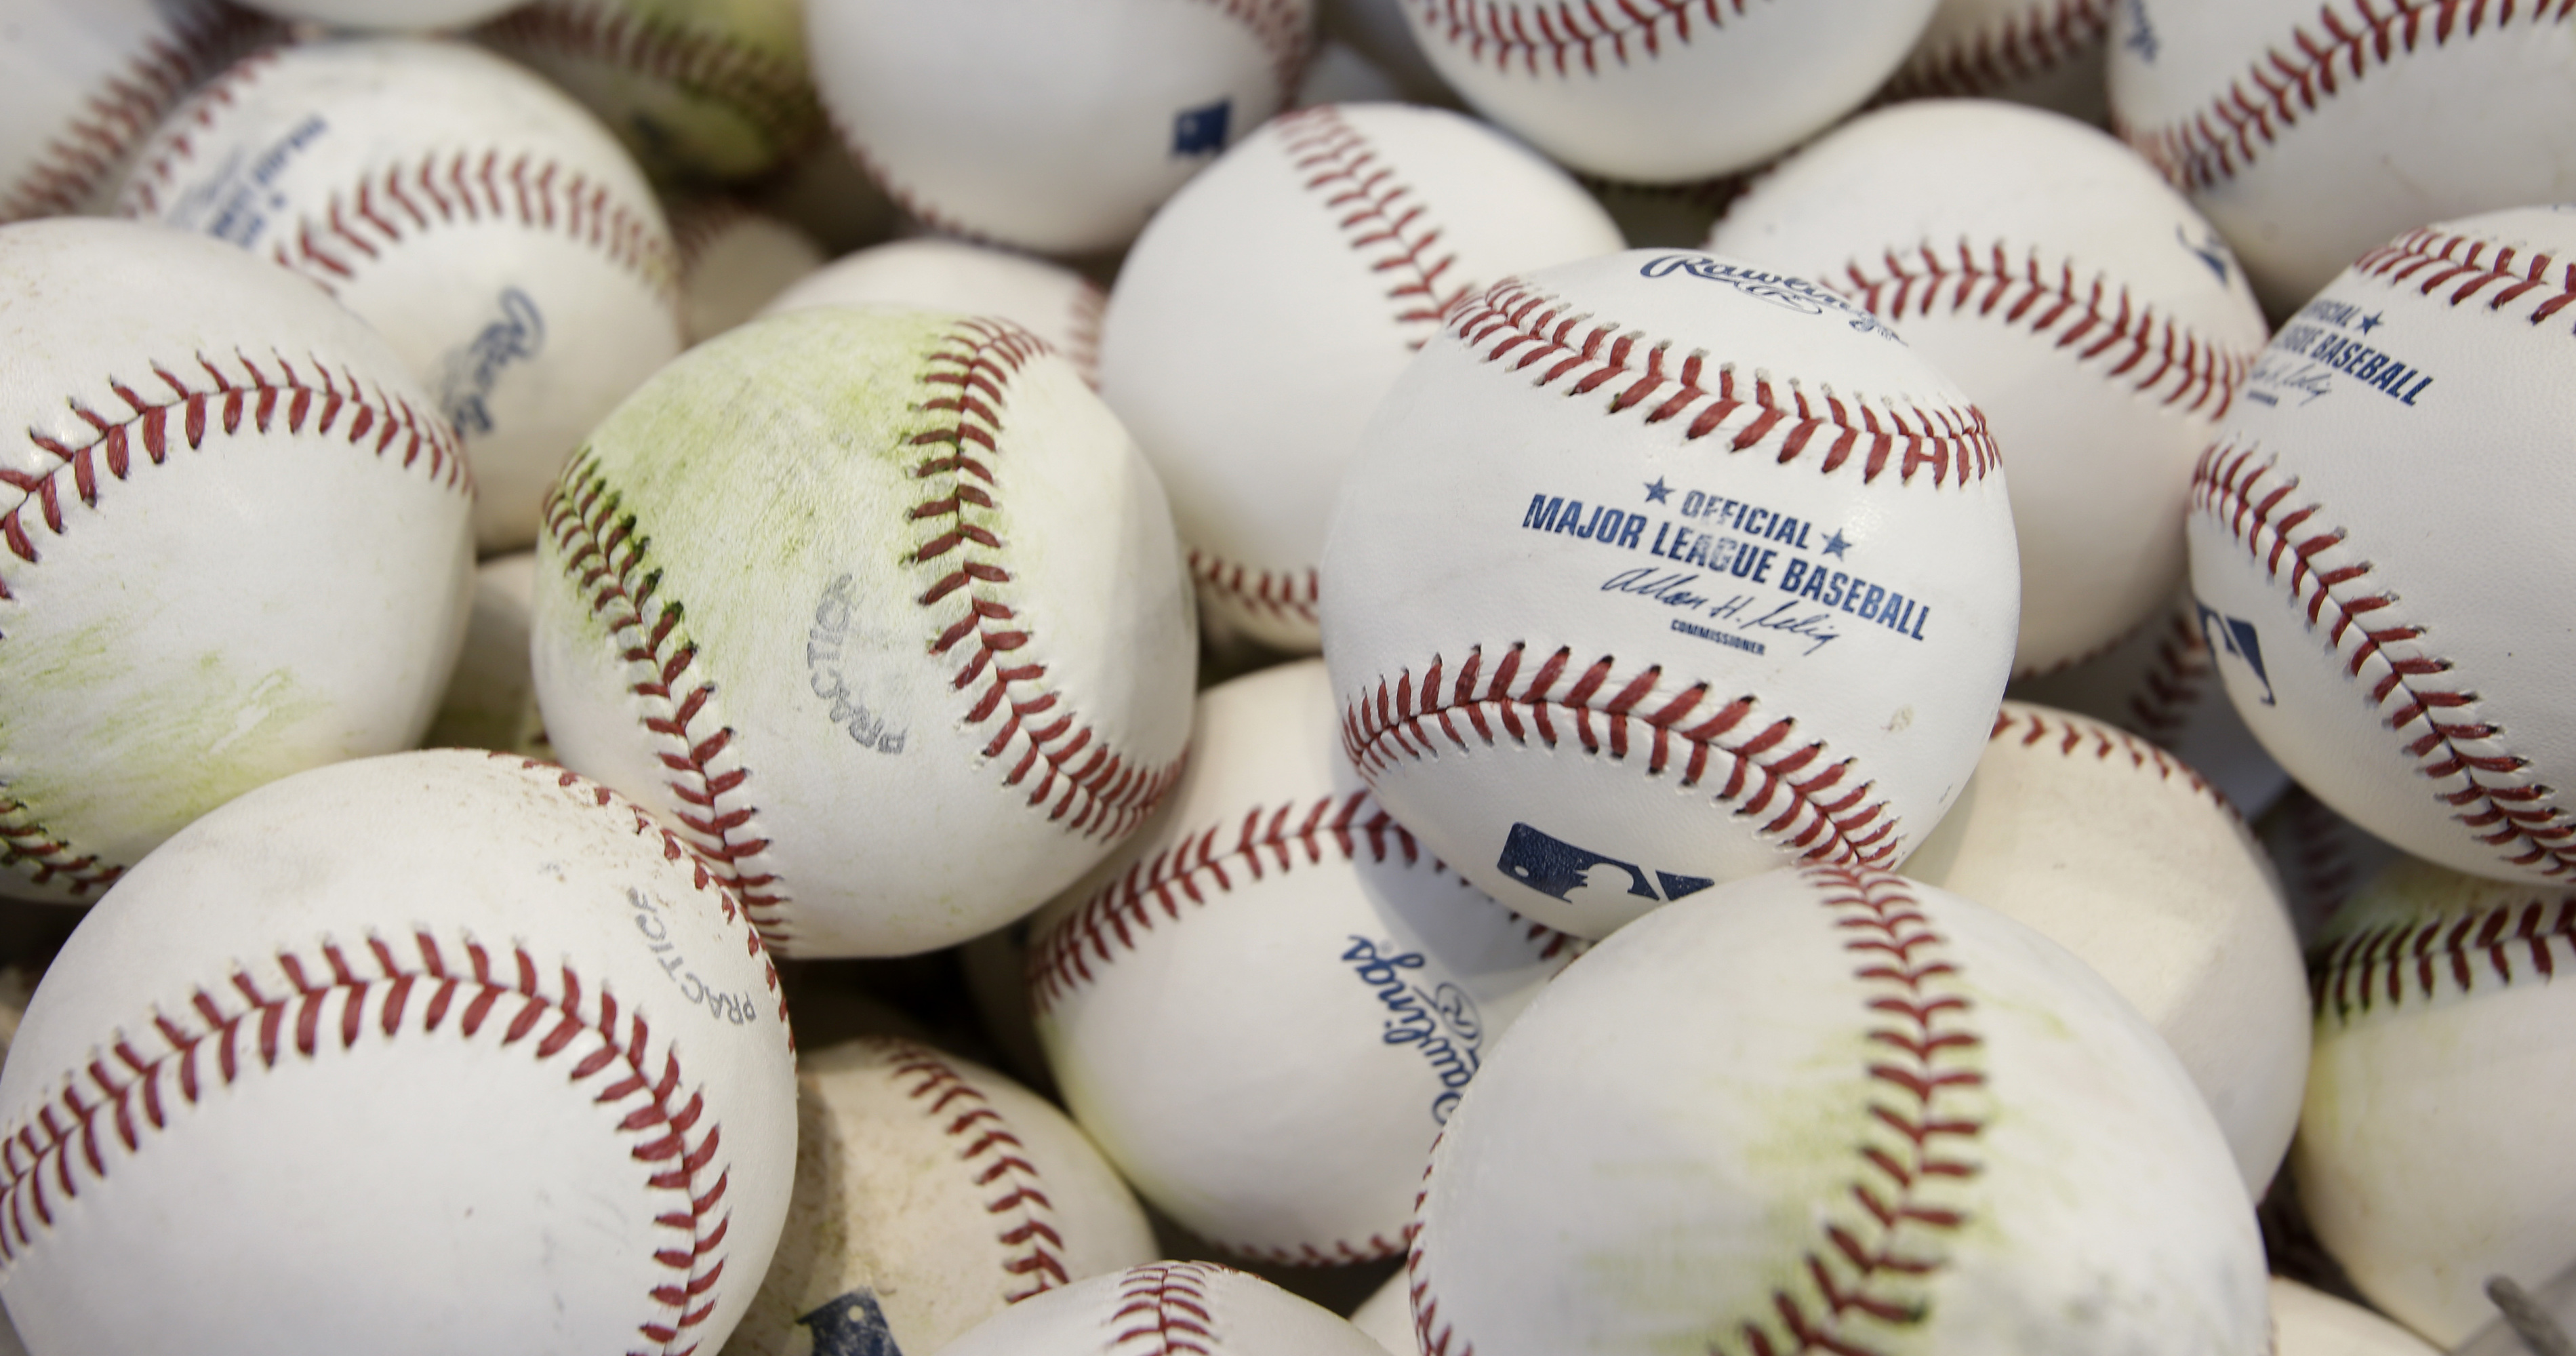 MLB Balls for sale